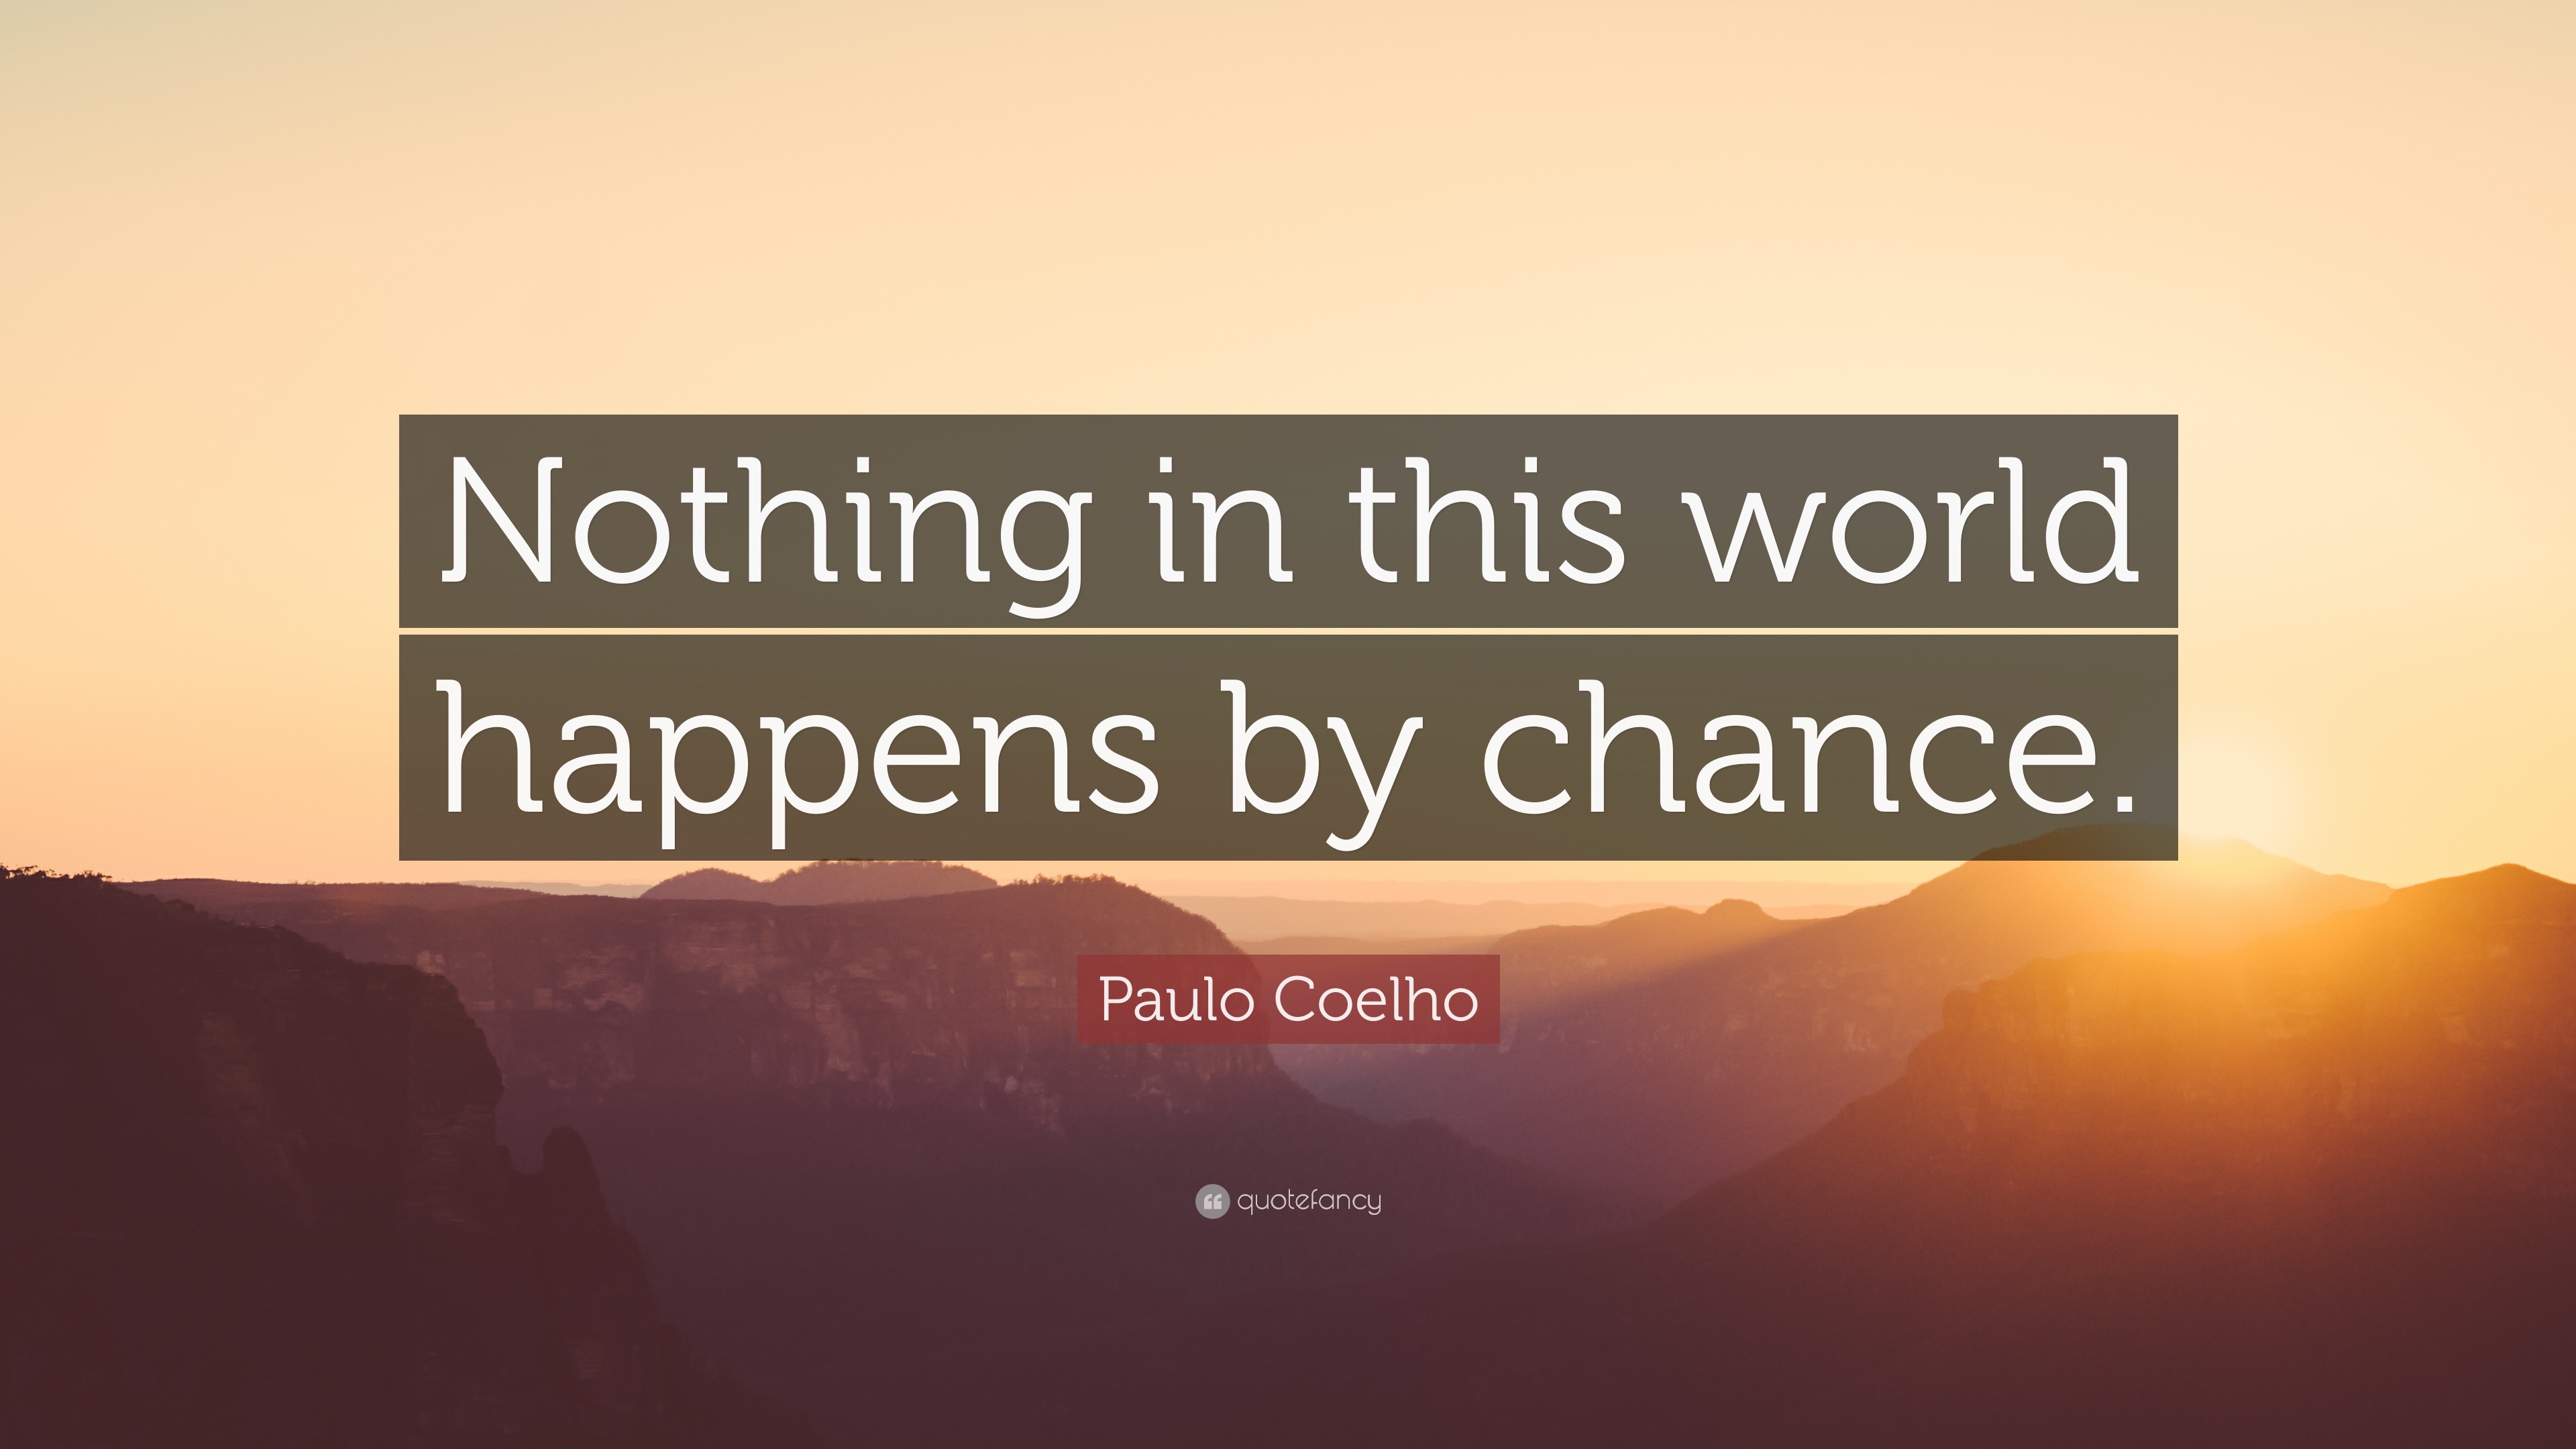 Paulo Coelho Quotes (100 wallpapers) - Quotefancy